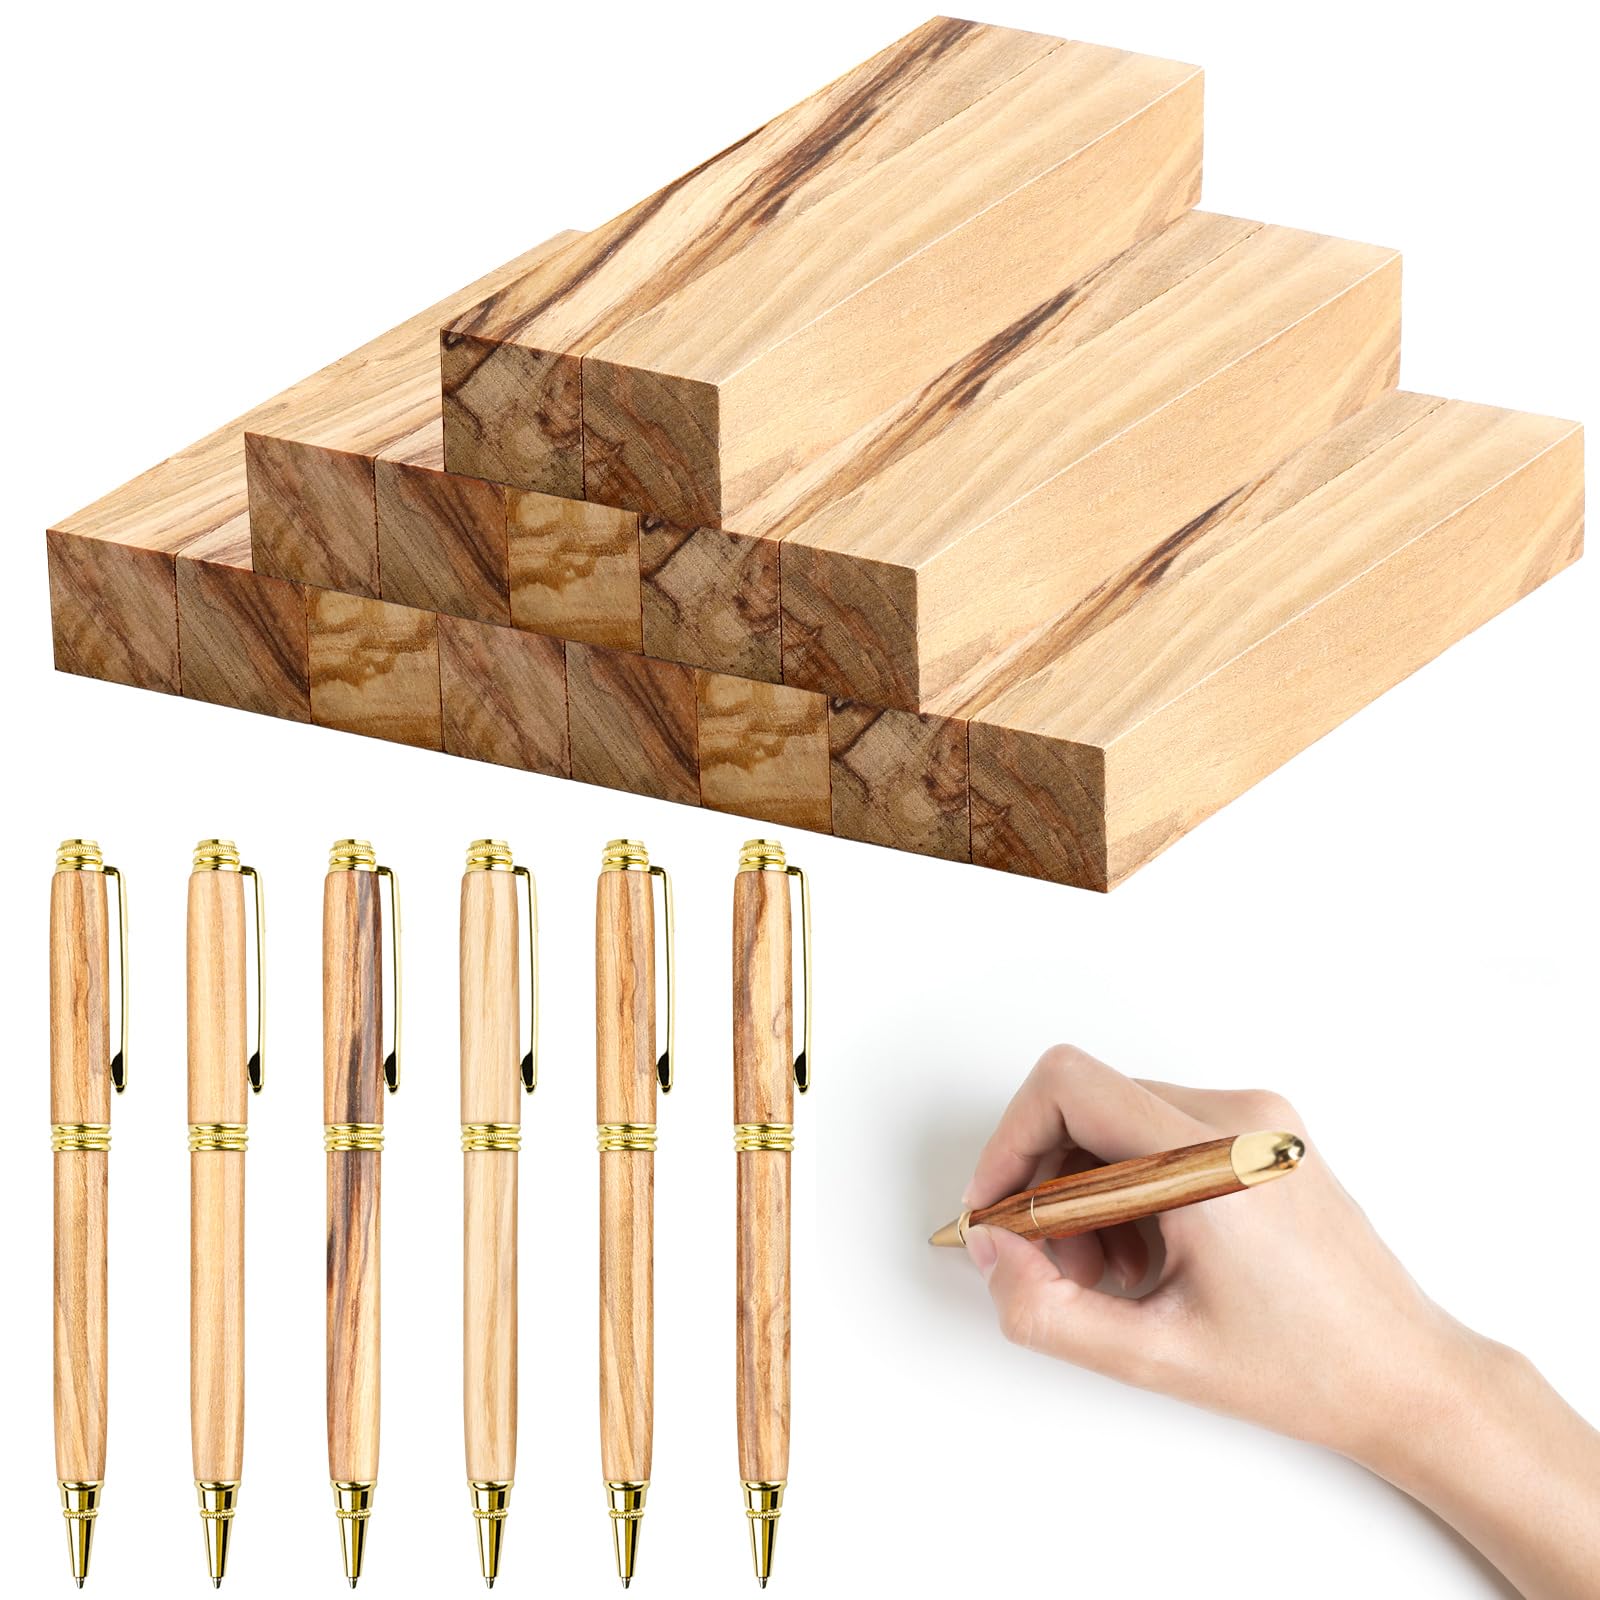 Spiareal 15 Pcs Olive Wood Pen Blanks Pen Turning Supplies DIY Crafts Pen Turning Kit, 5 x 3/4 x 3/4 Inch